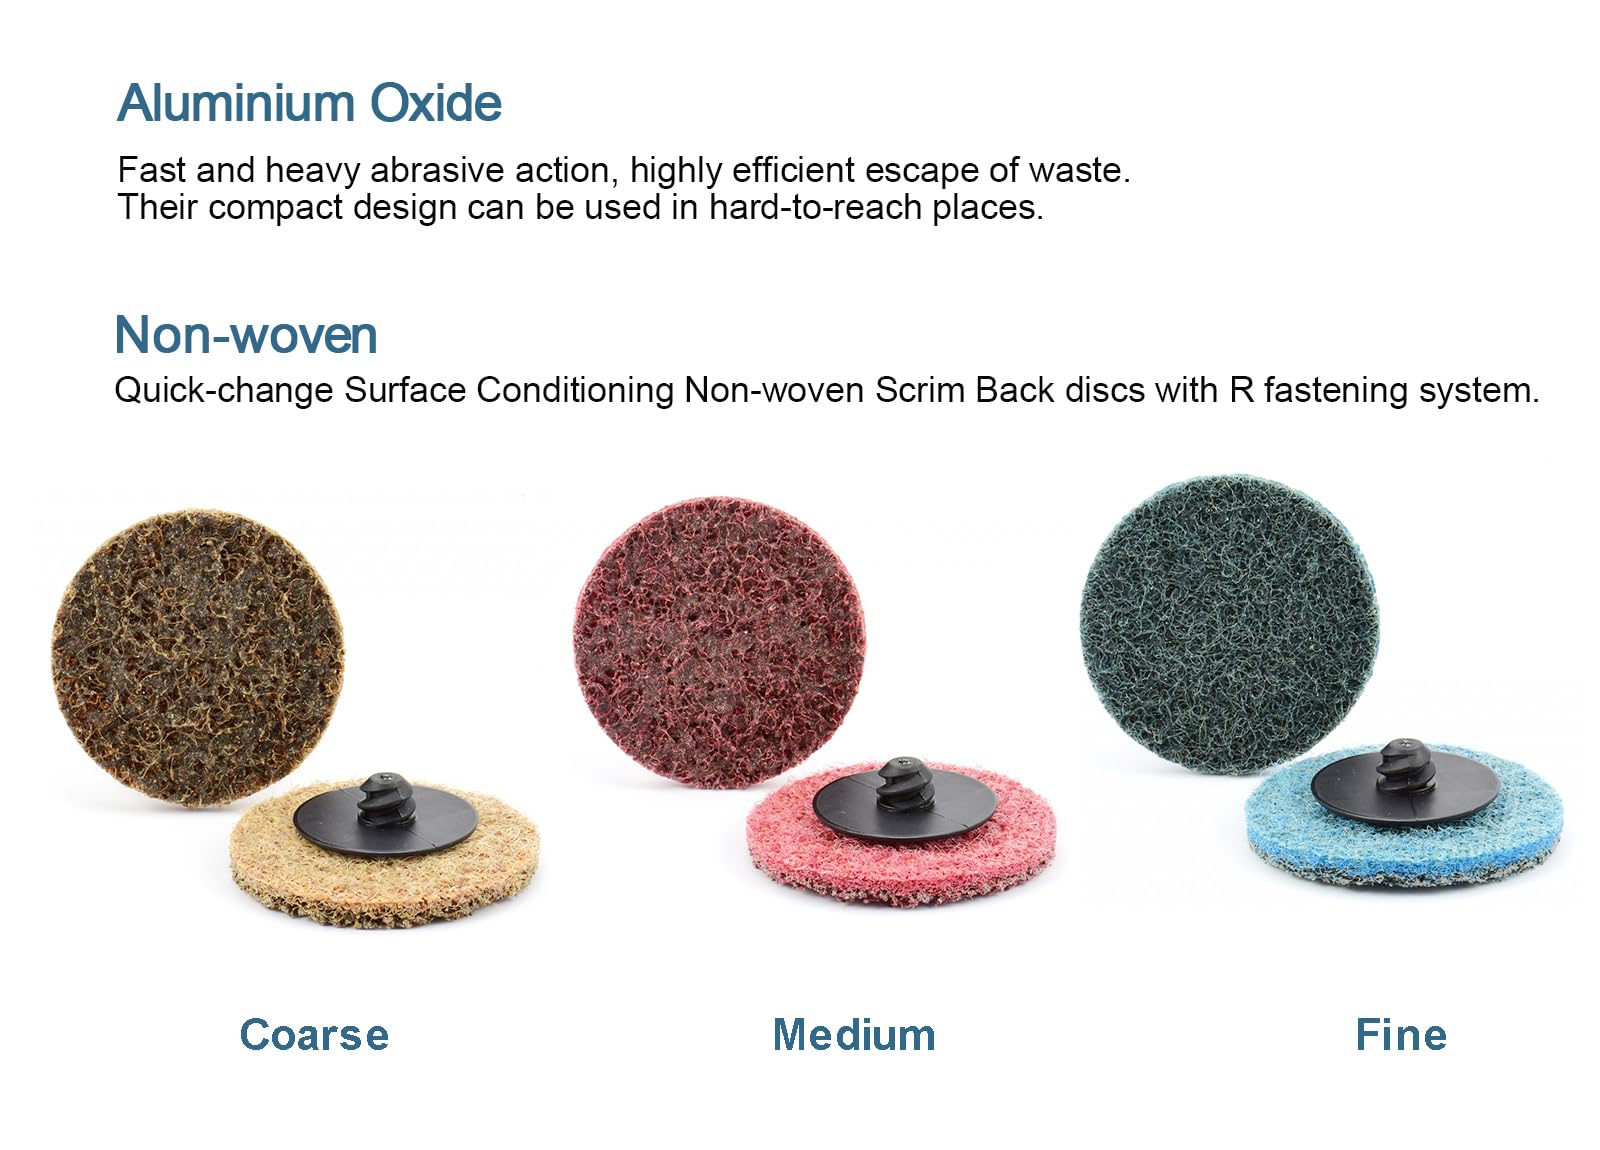 COSPOF 3 Inch Surface Conditioning Discs, 25 Pcs Medium Sanding Discs, Type-R Quick Change and Heat Dissipation (Red-Medium).